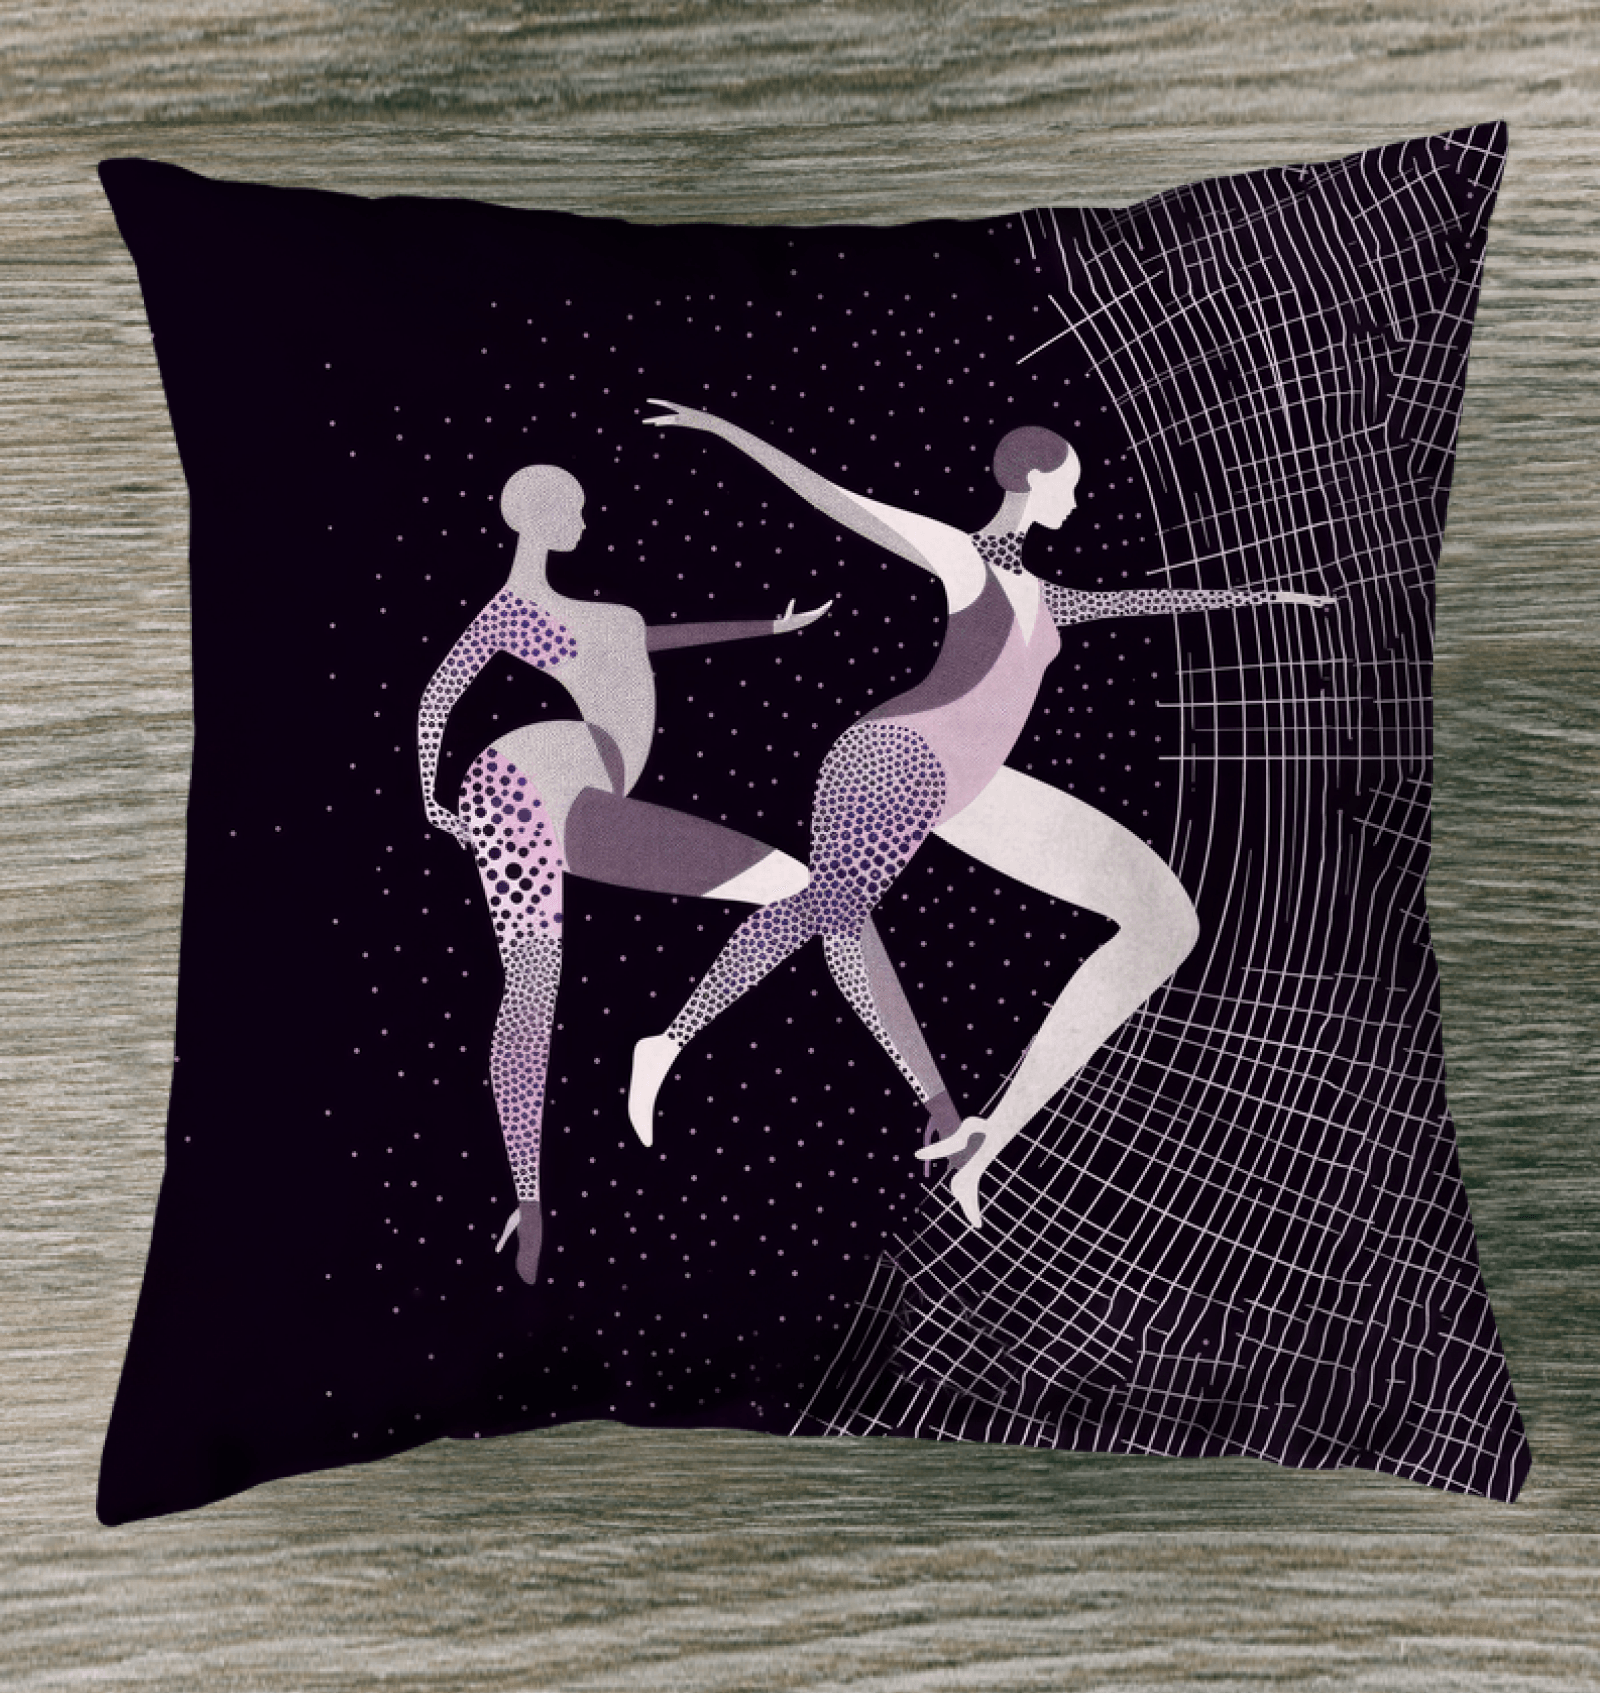 Fierce Feminine Dance Moves themed decorative indoor pillow